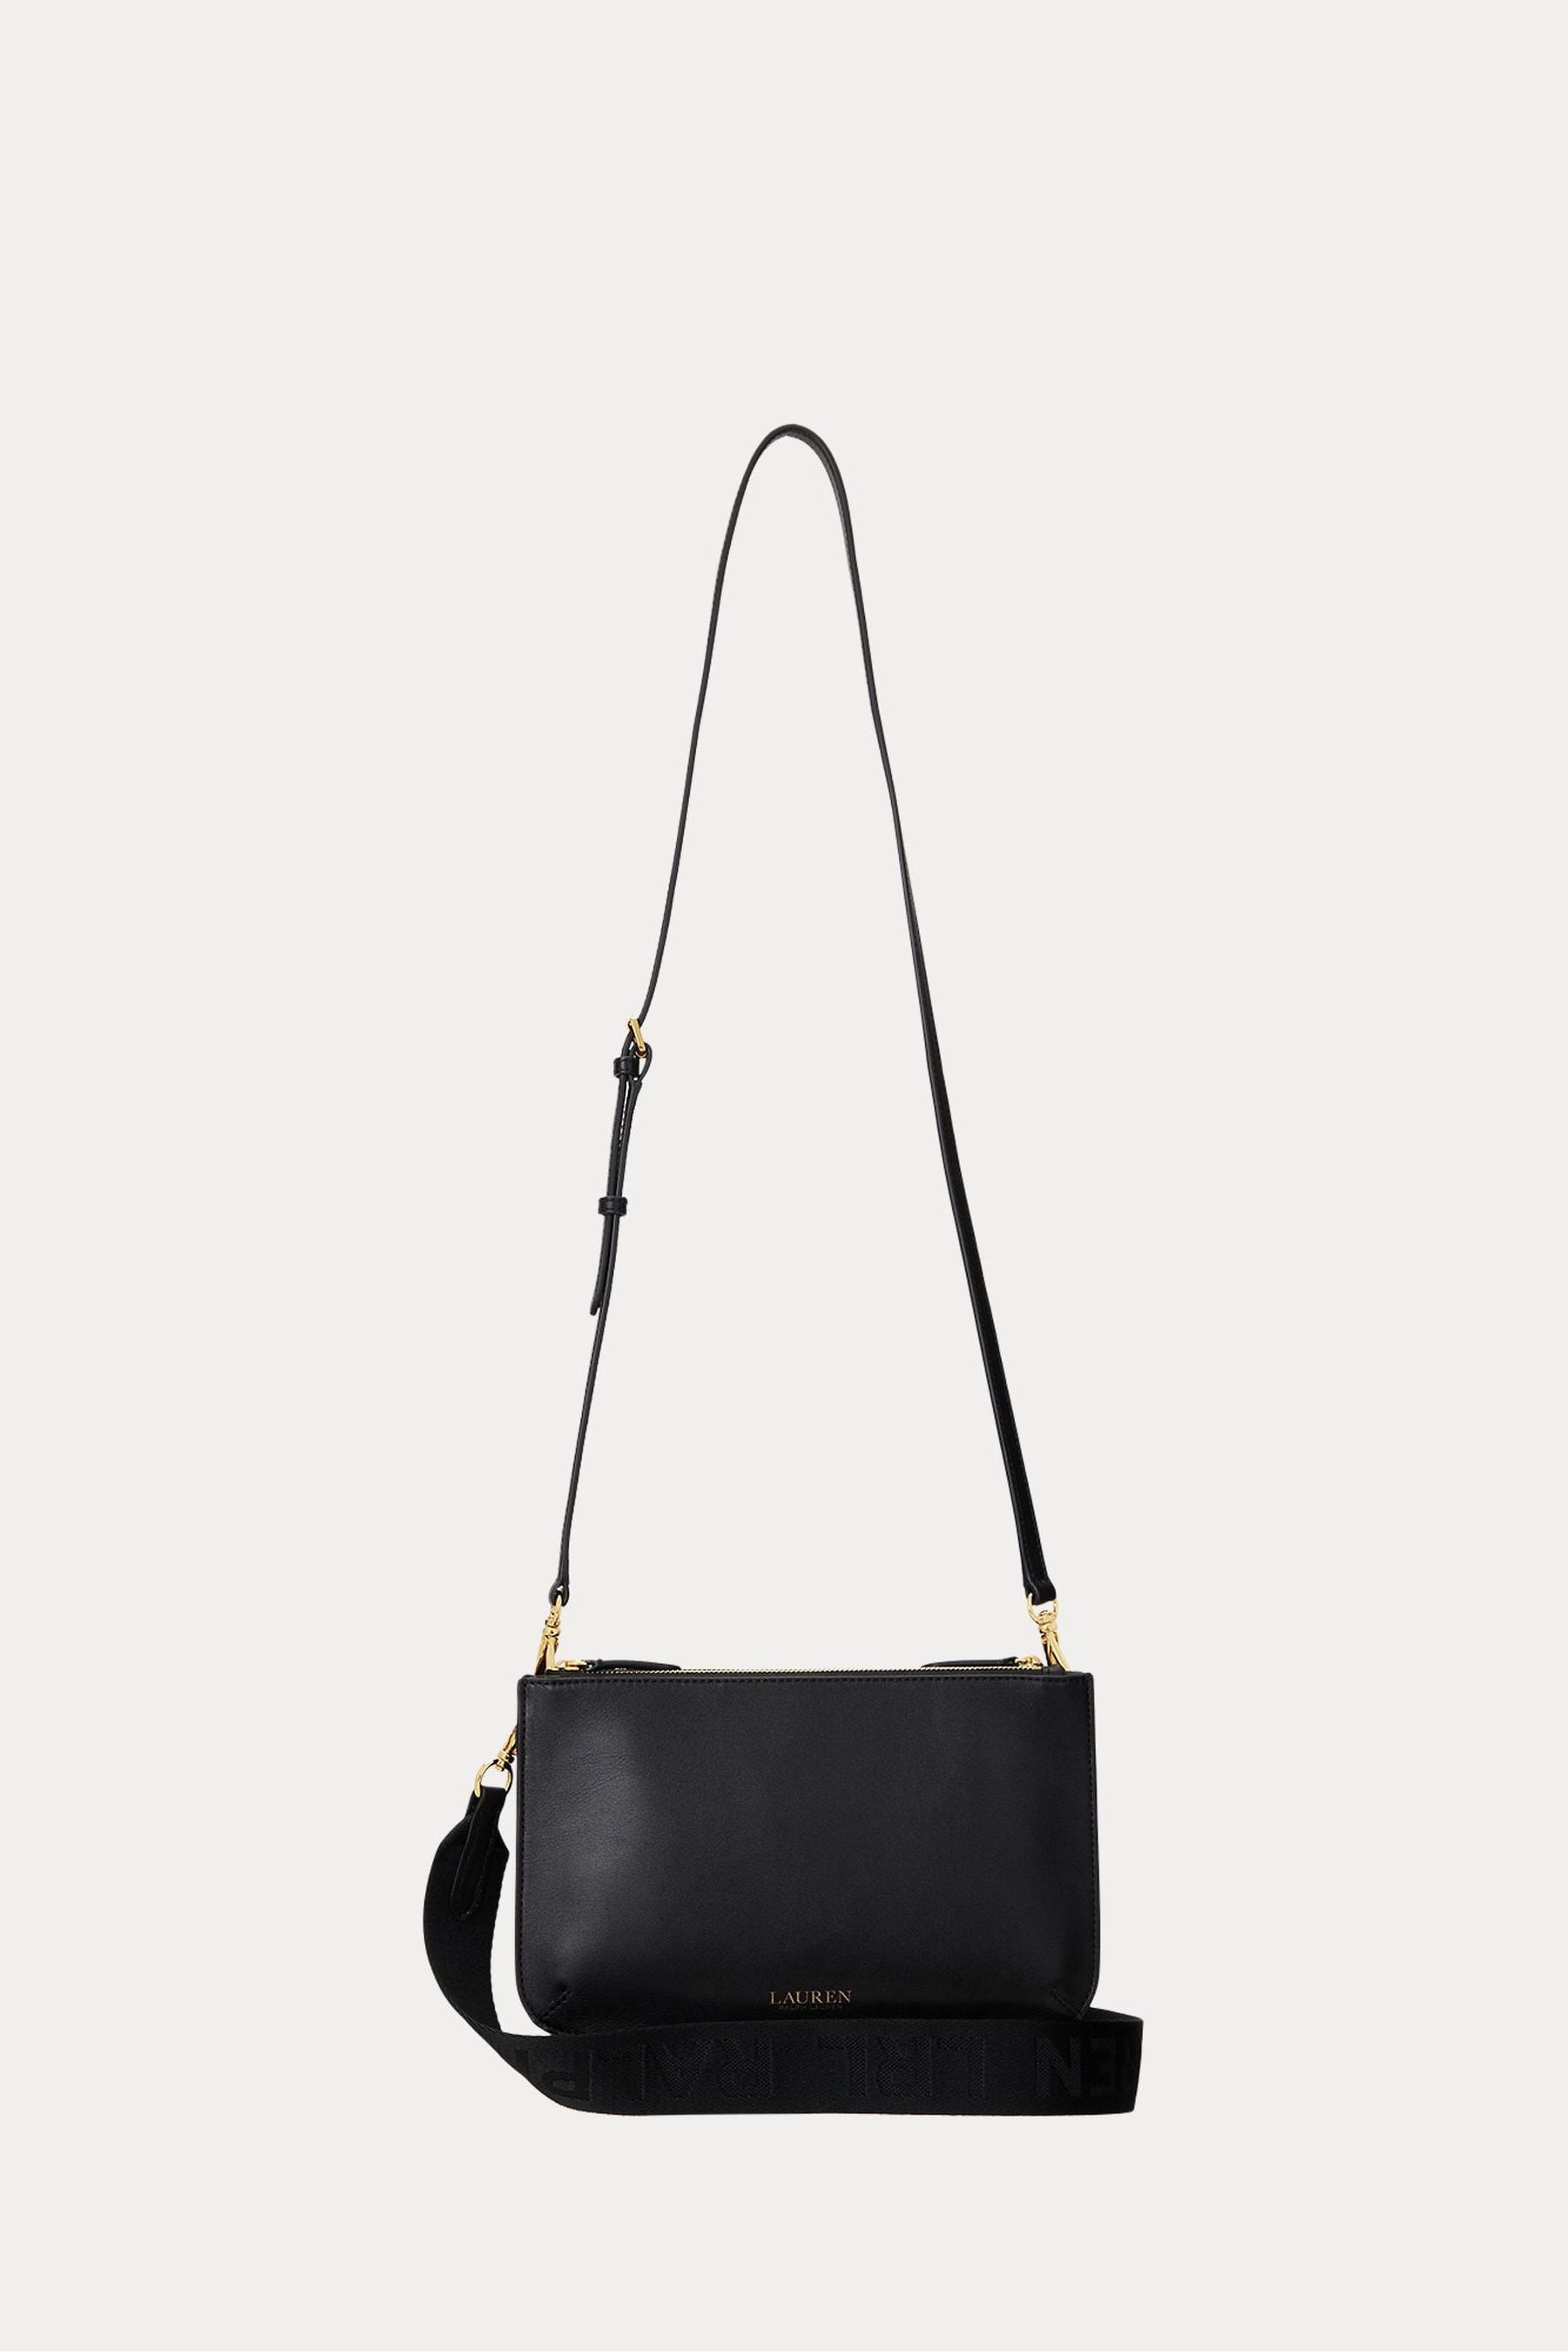 Buy Lauren Ralph Lauren Medium Leather Landyn Cross-Body Bag from the ...